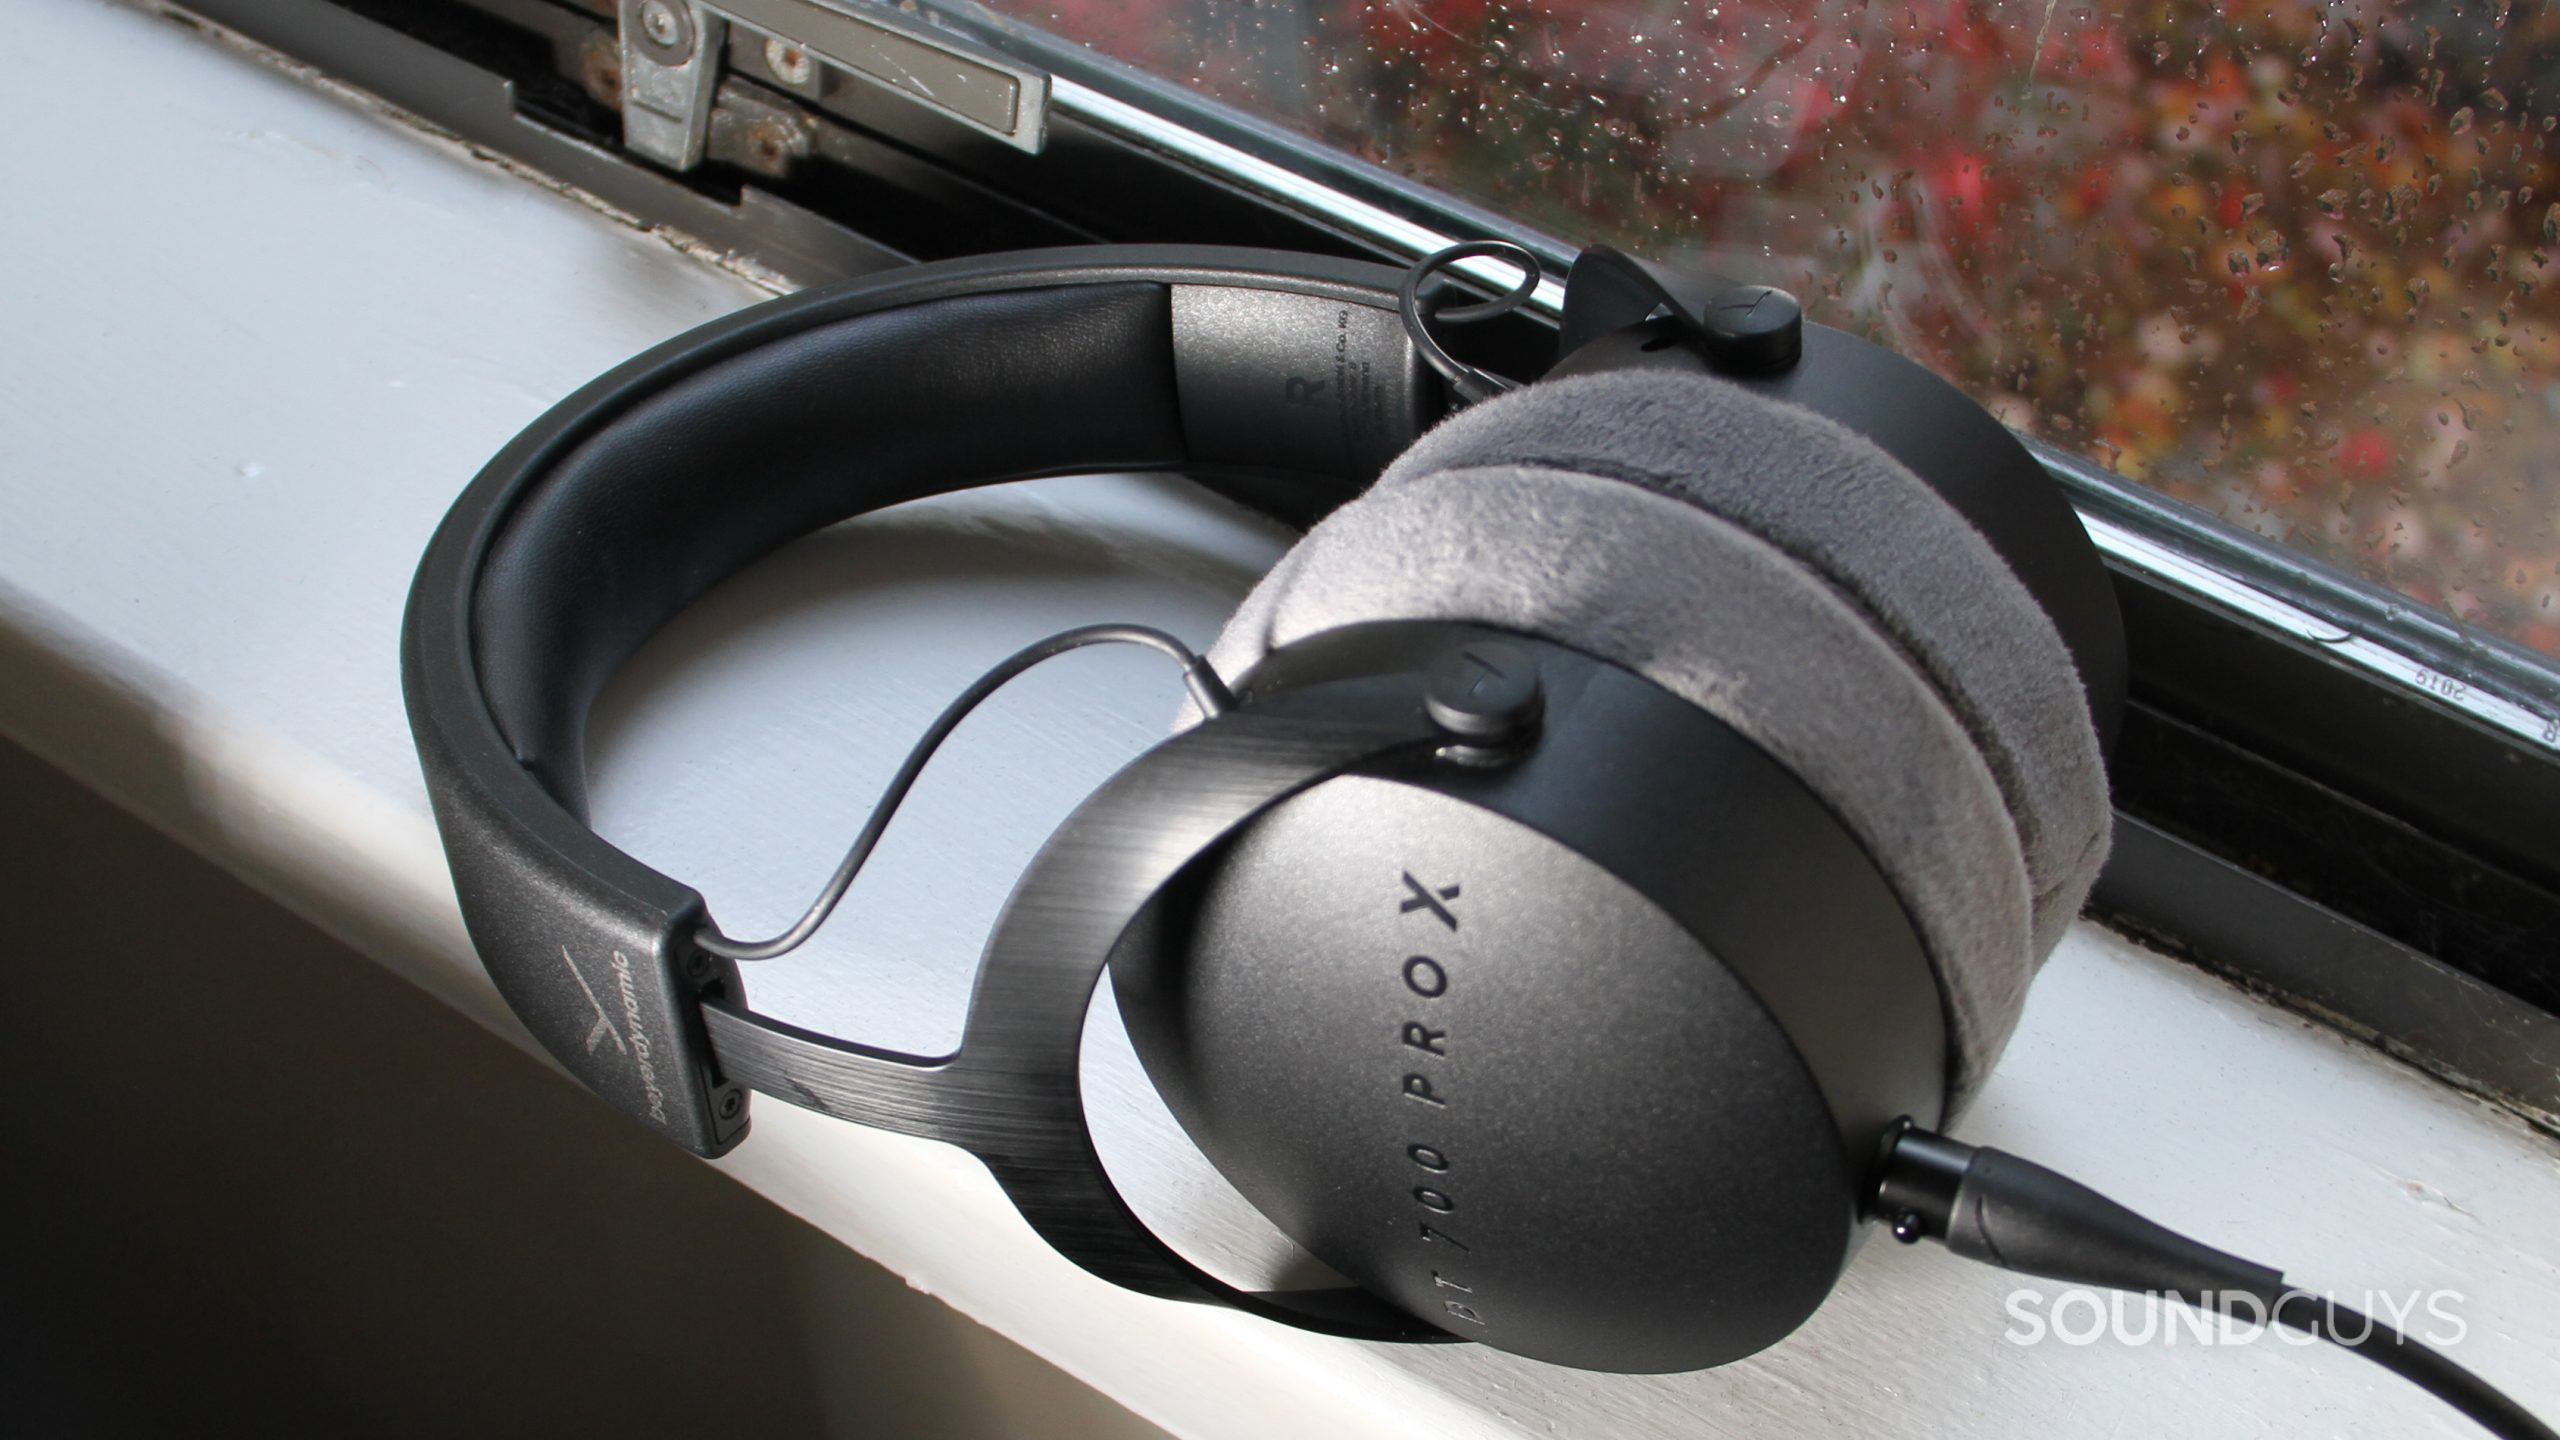 Beyerdynamic DT 770 Pro Review: The Headphones Studio